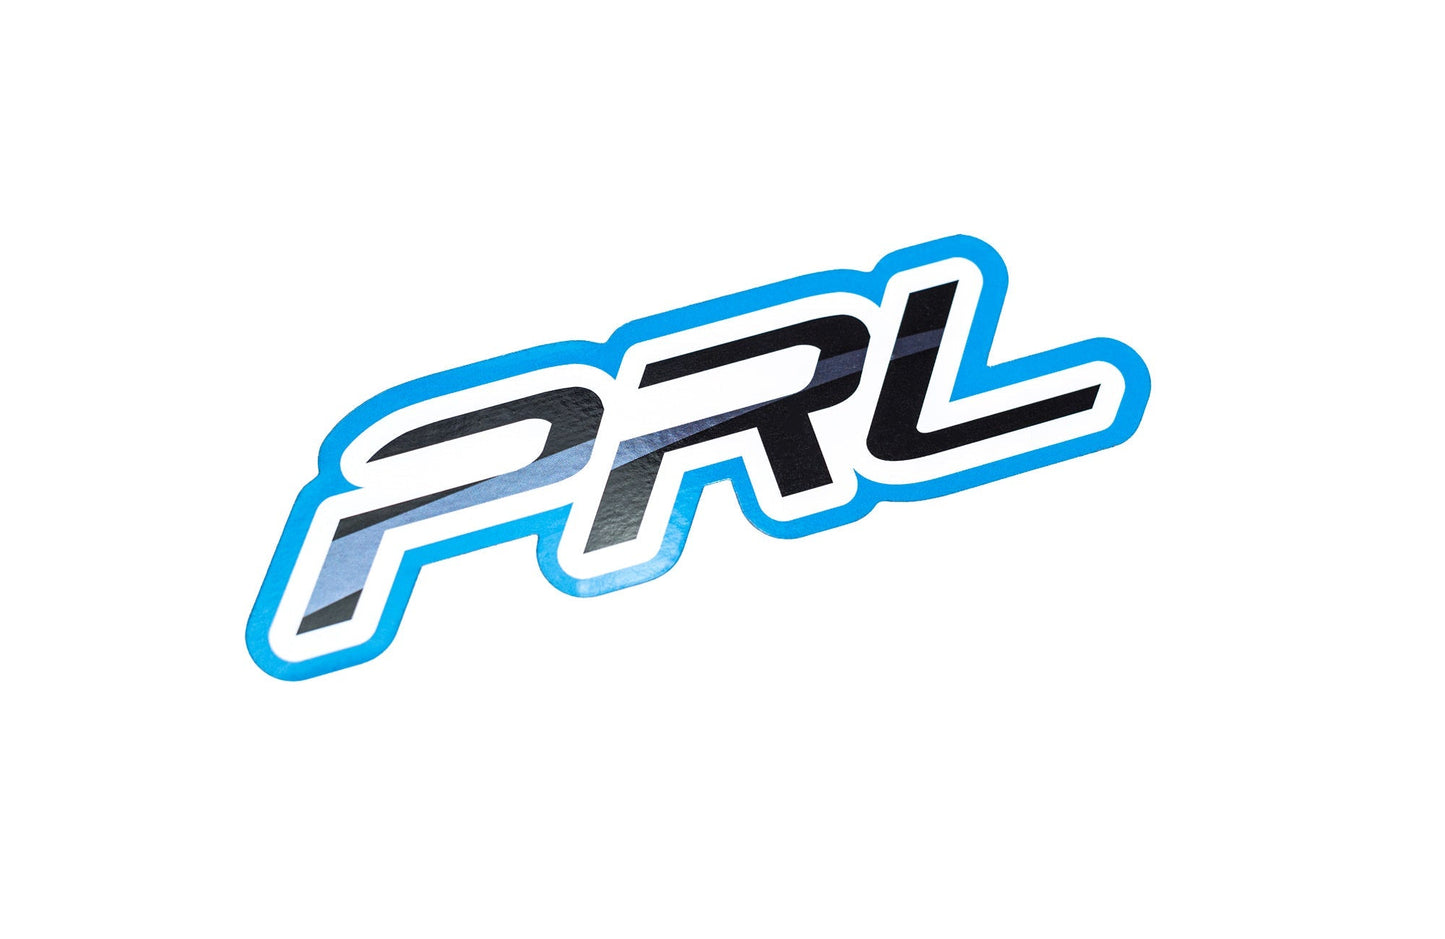 PRL Motorsports Logo Sticker